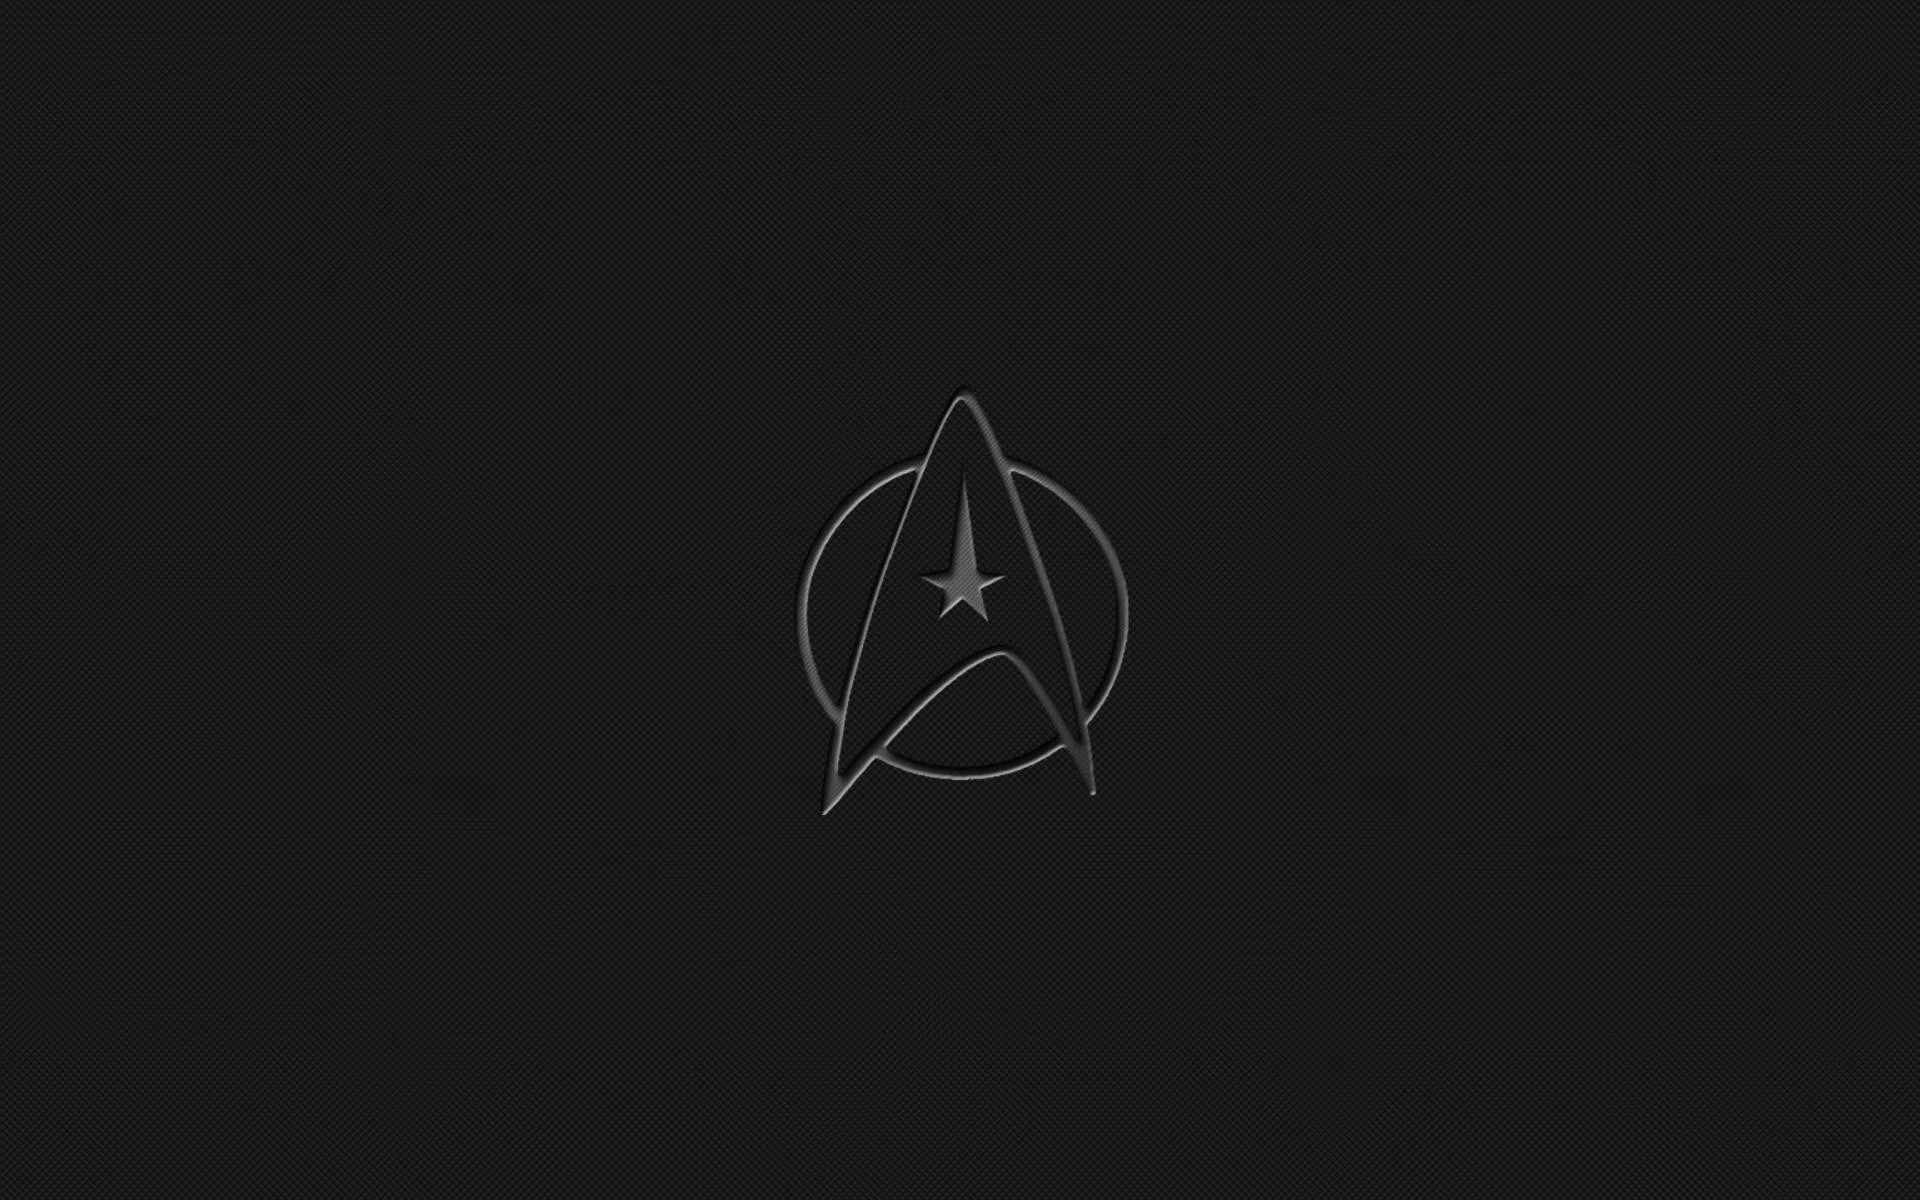 Star trek logo desktop background